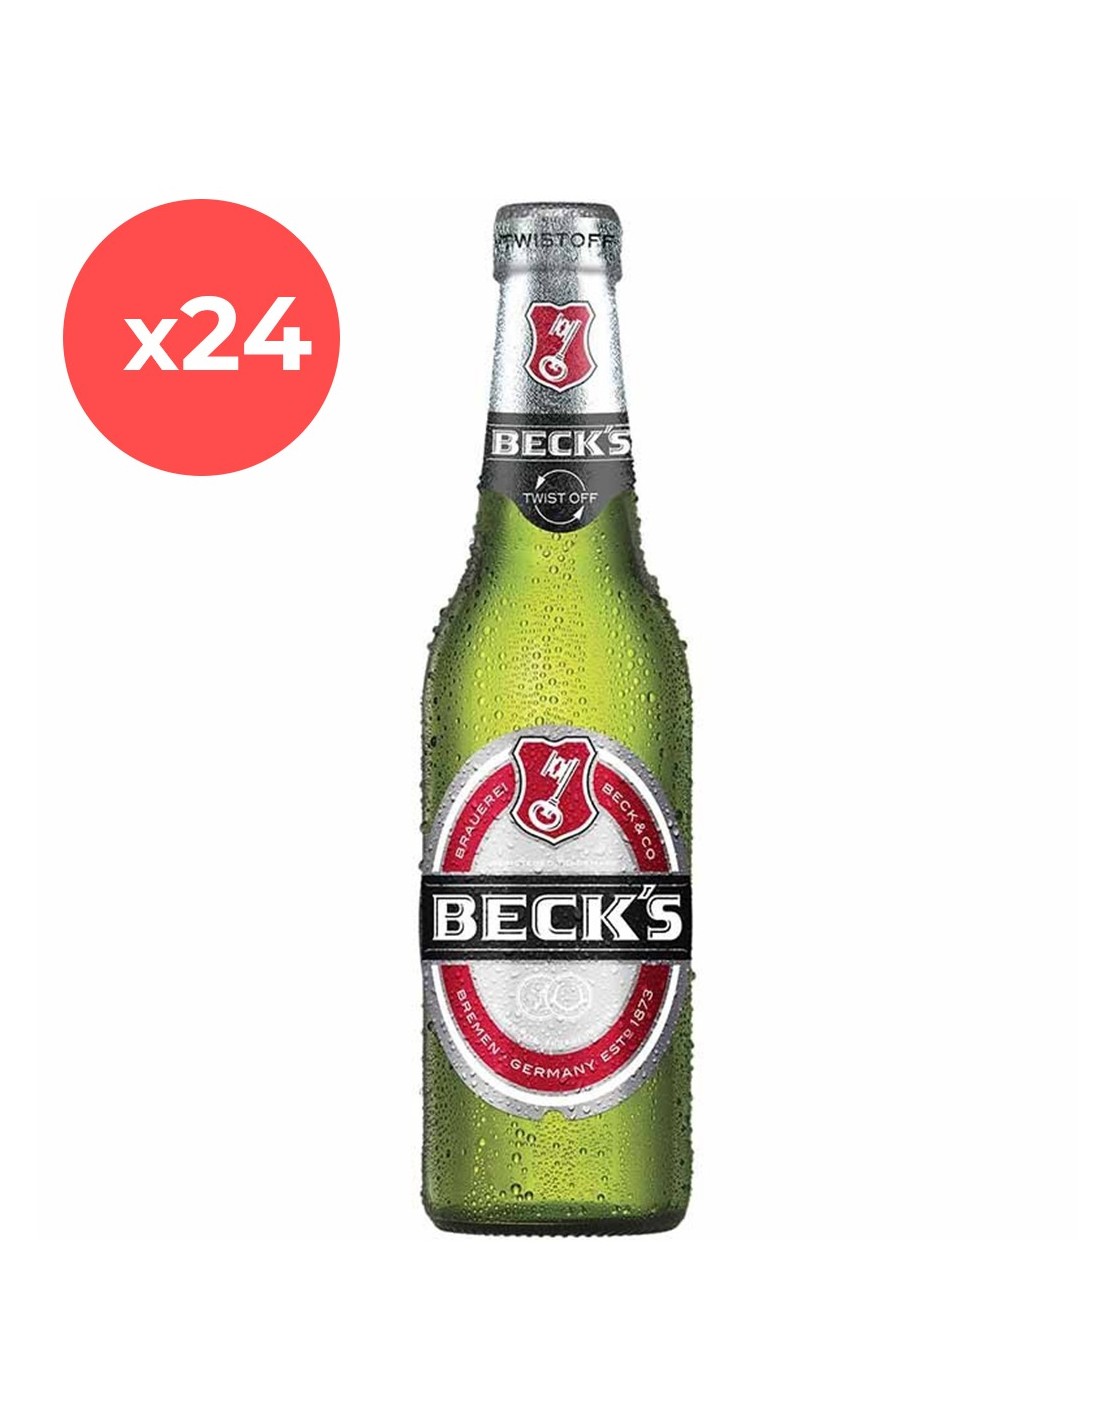 Bax 24 bucati bere blonda, Pilsner, Beck’s, 4.9% alc., 0.33L, sticla, Romania alcooldiscount.ro